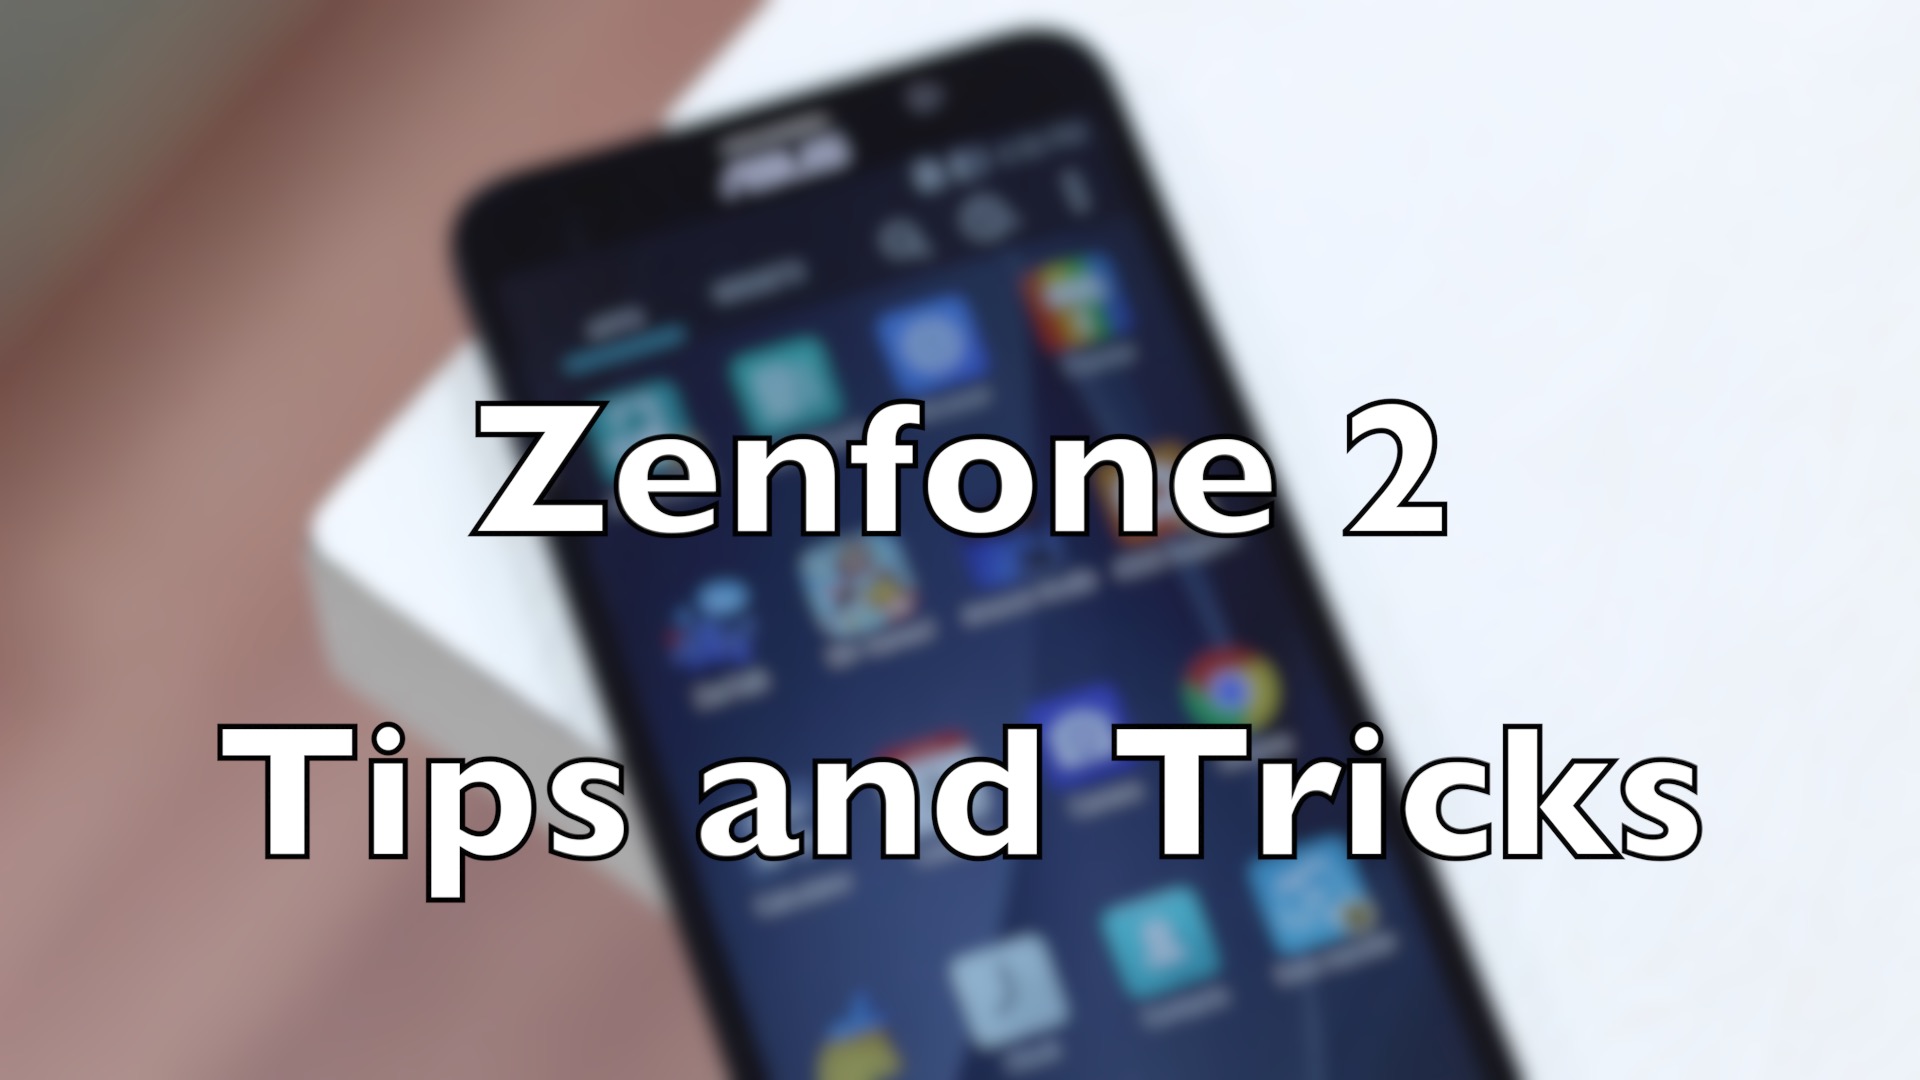 asus zenfone 2 laser wallpaper,mobile phone,gadget,smartphone,communication device,portable communications device